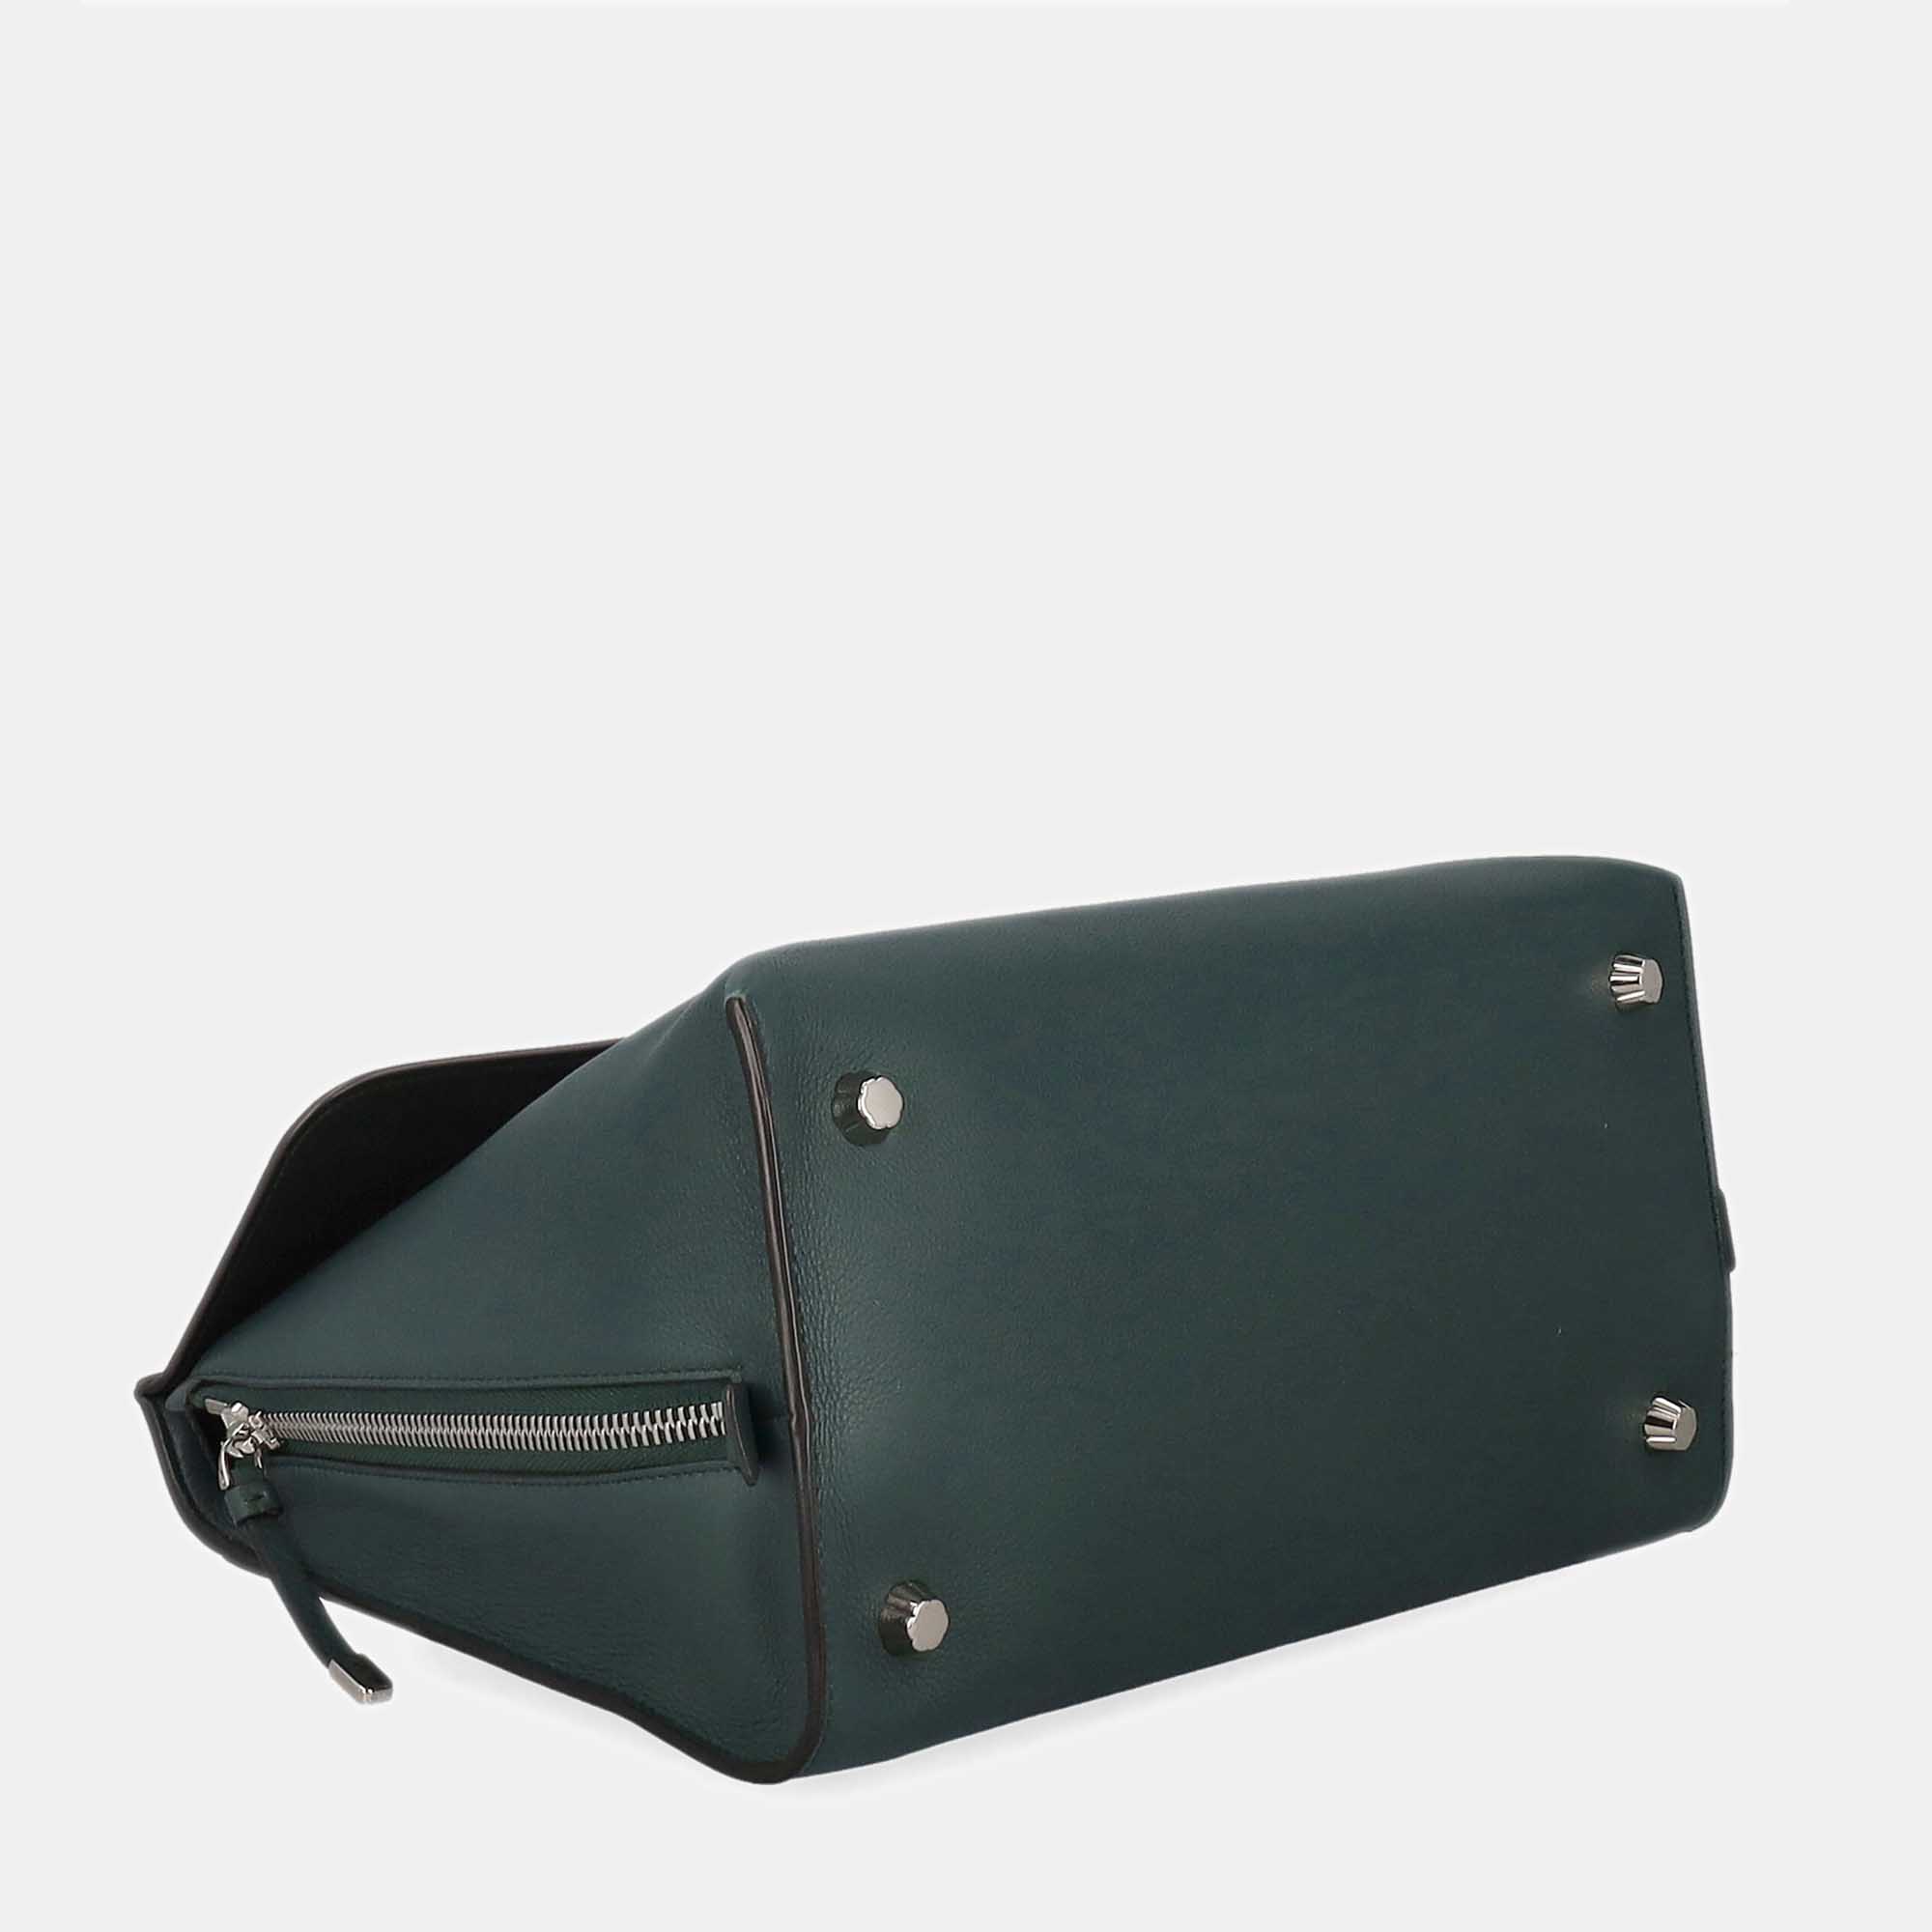 Salvatore Ferragamo  Women's Leather Shoulder Bag - Green - One Size